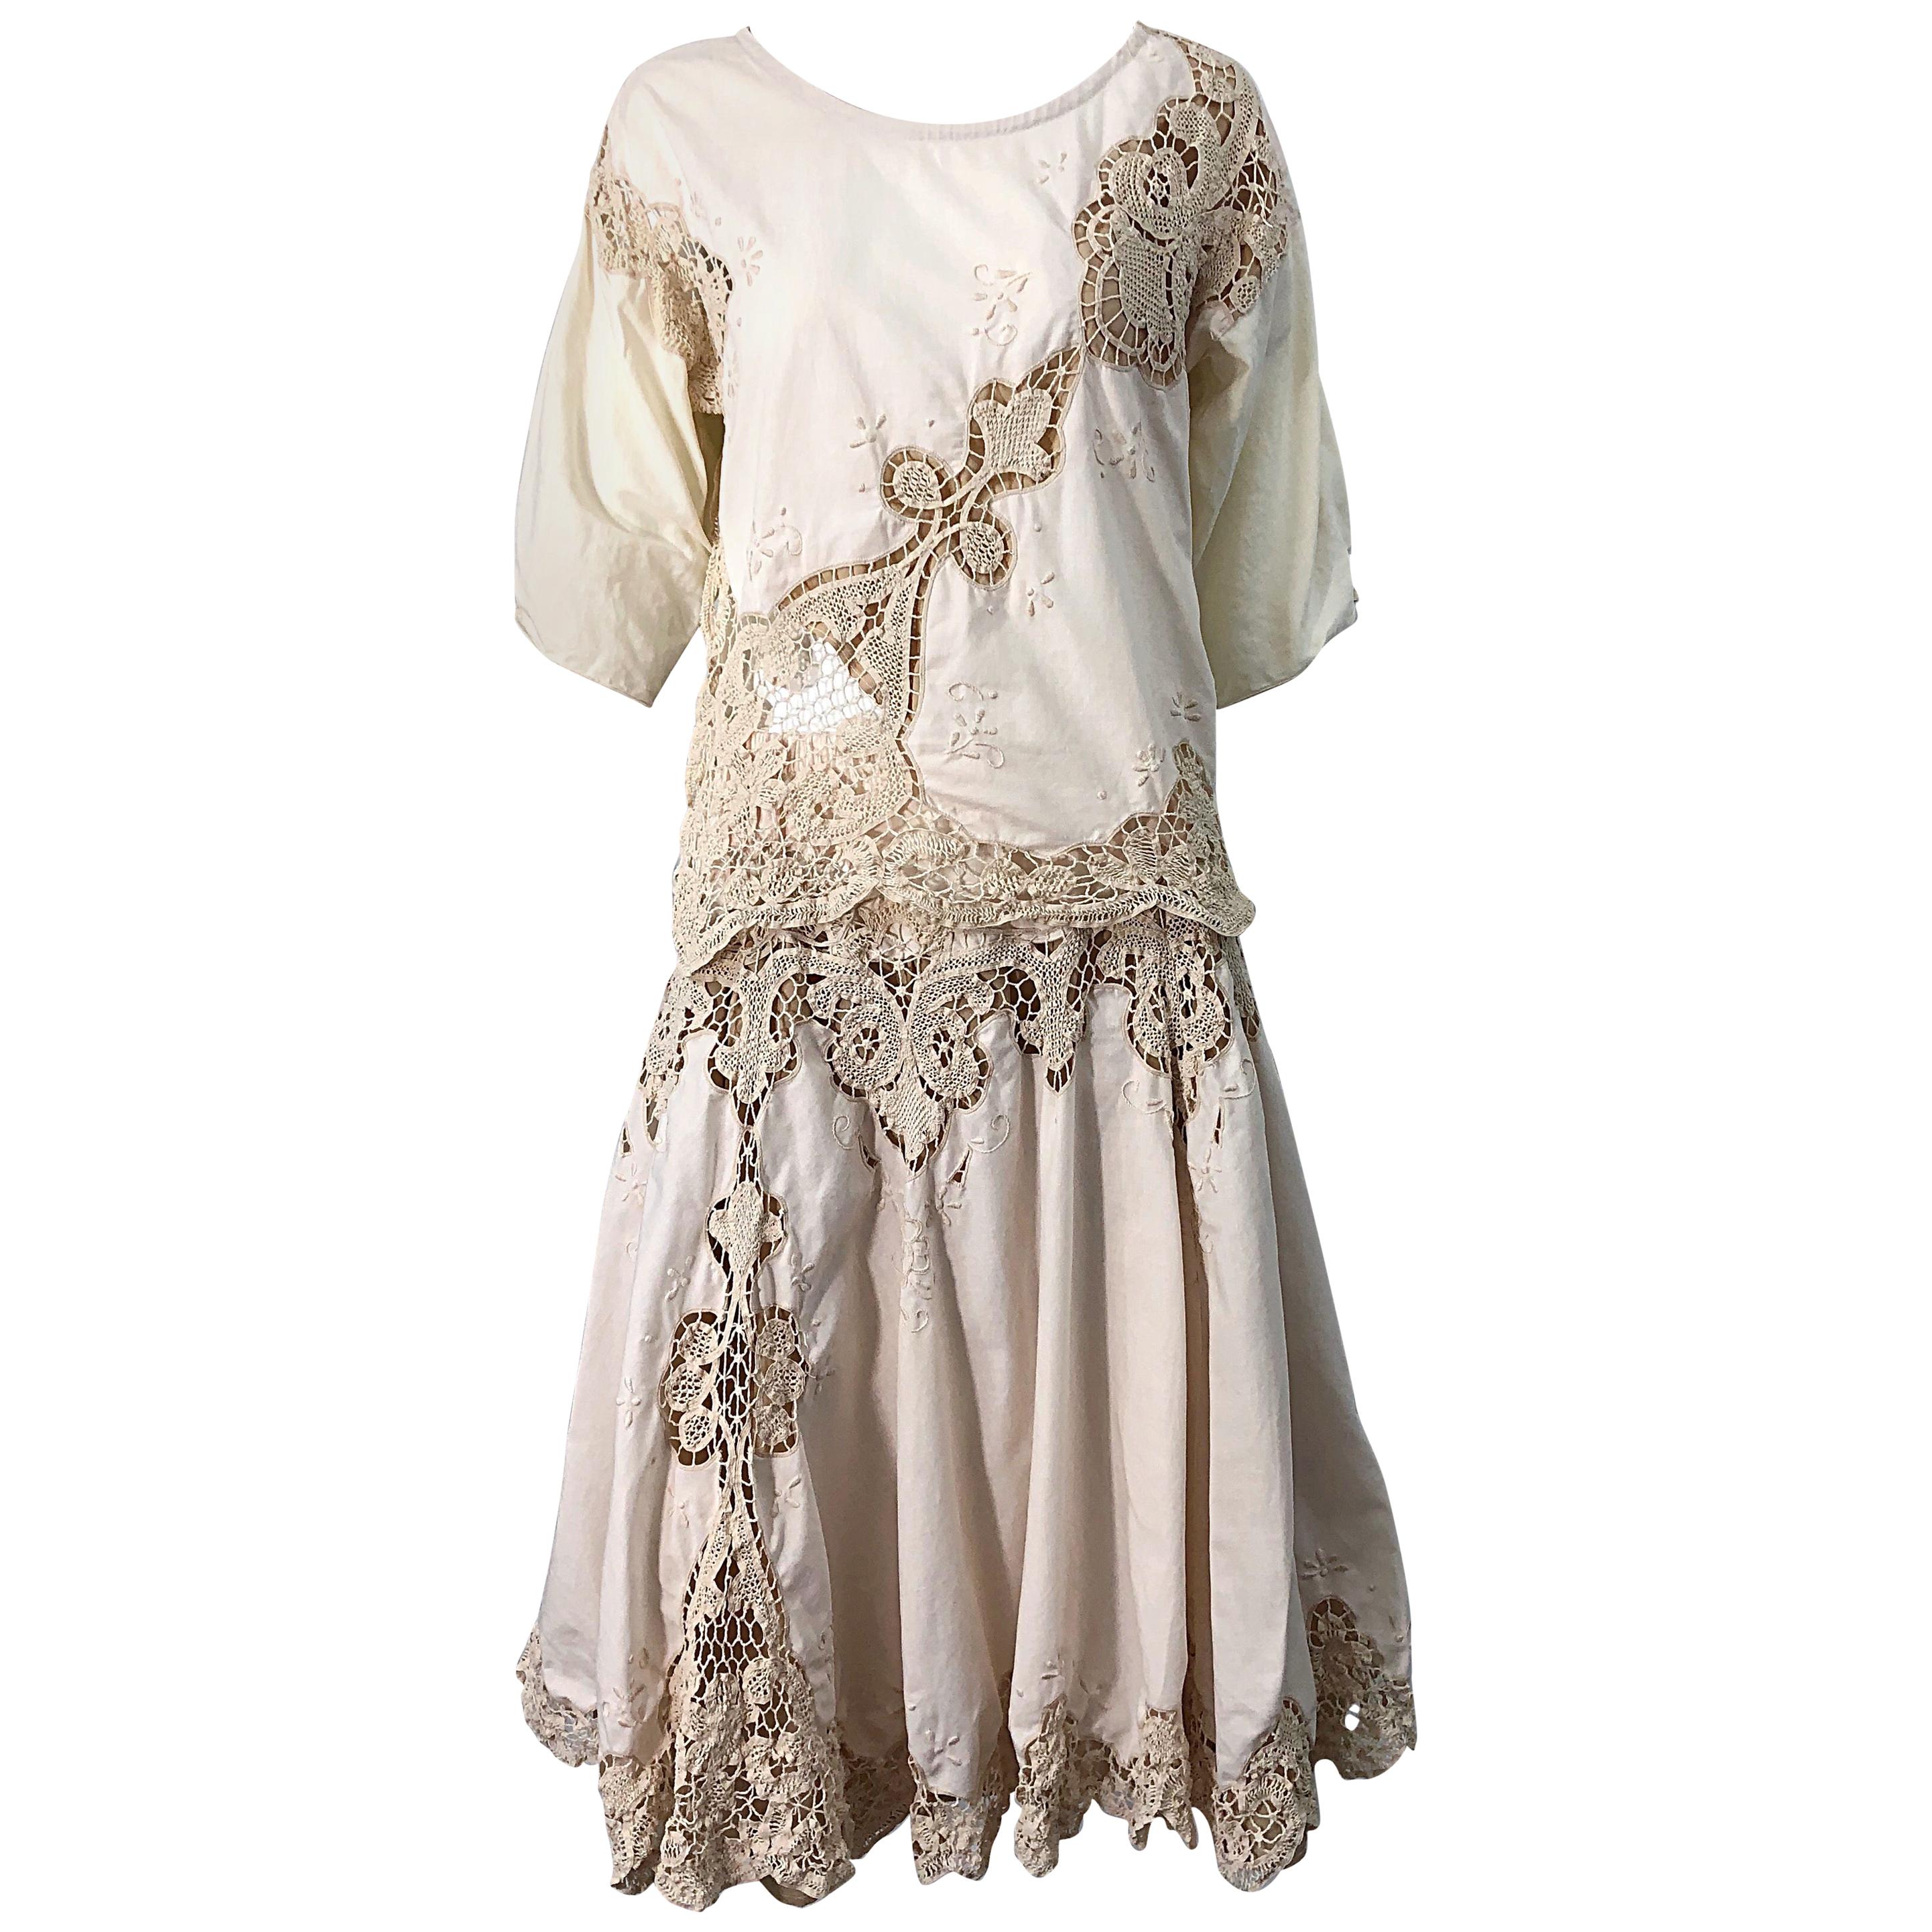 1980s Ivory Cotton Crochet Boho Shirt / Skirt Vintage 80s Dress Ensemble Set